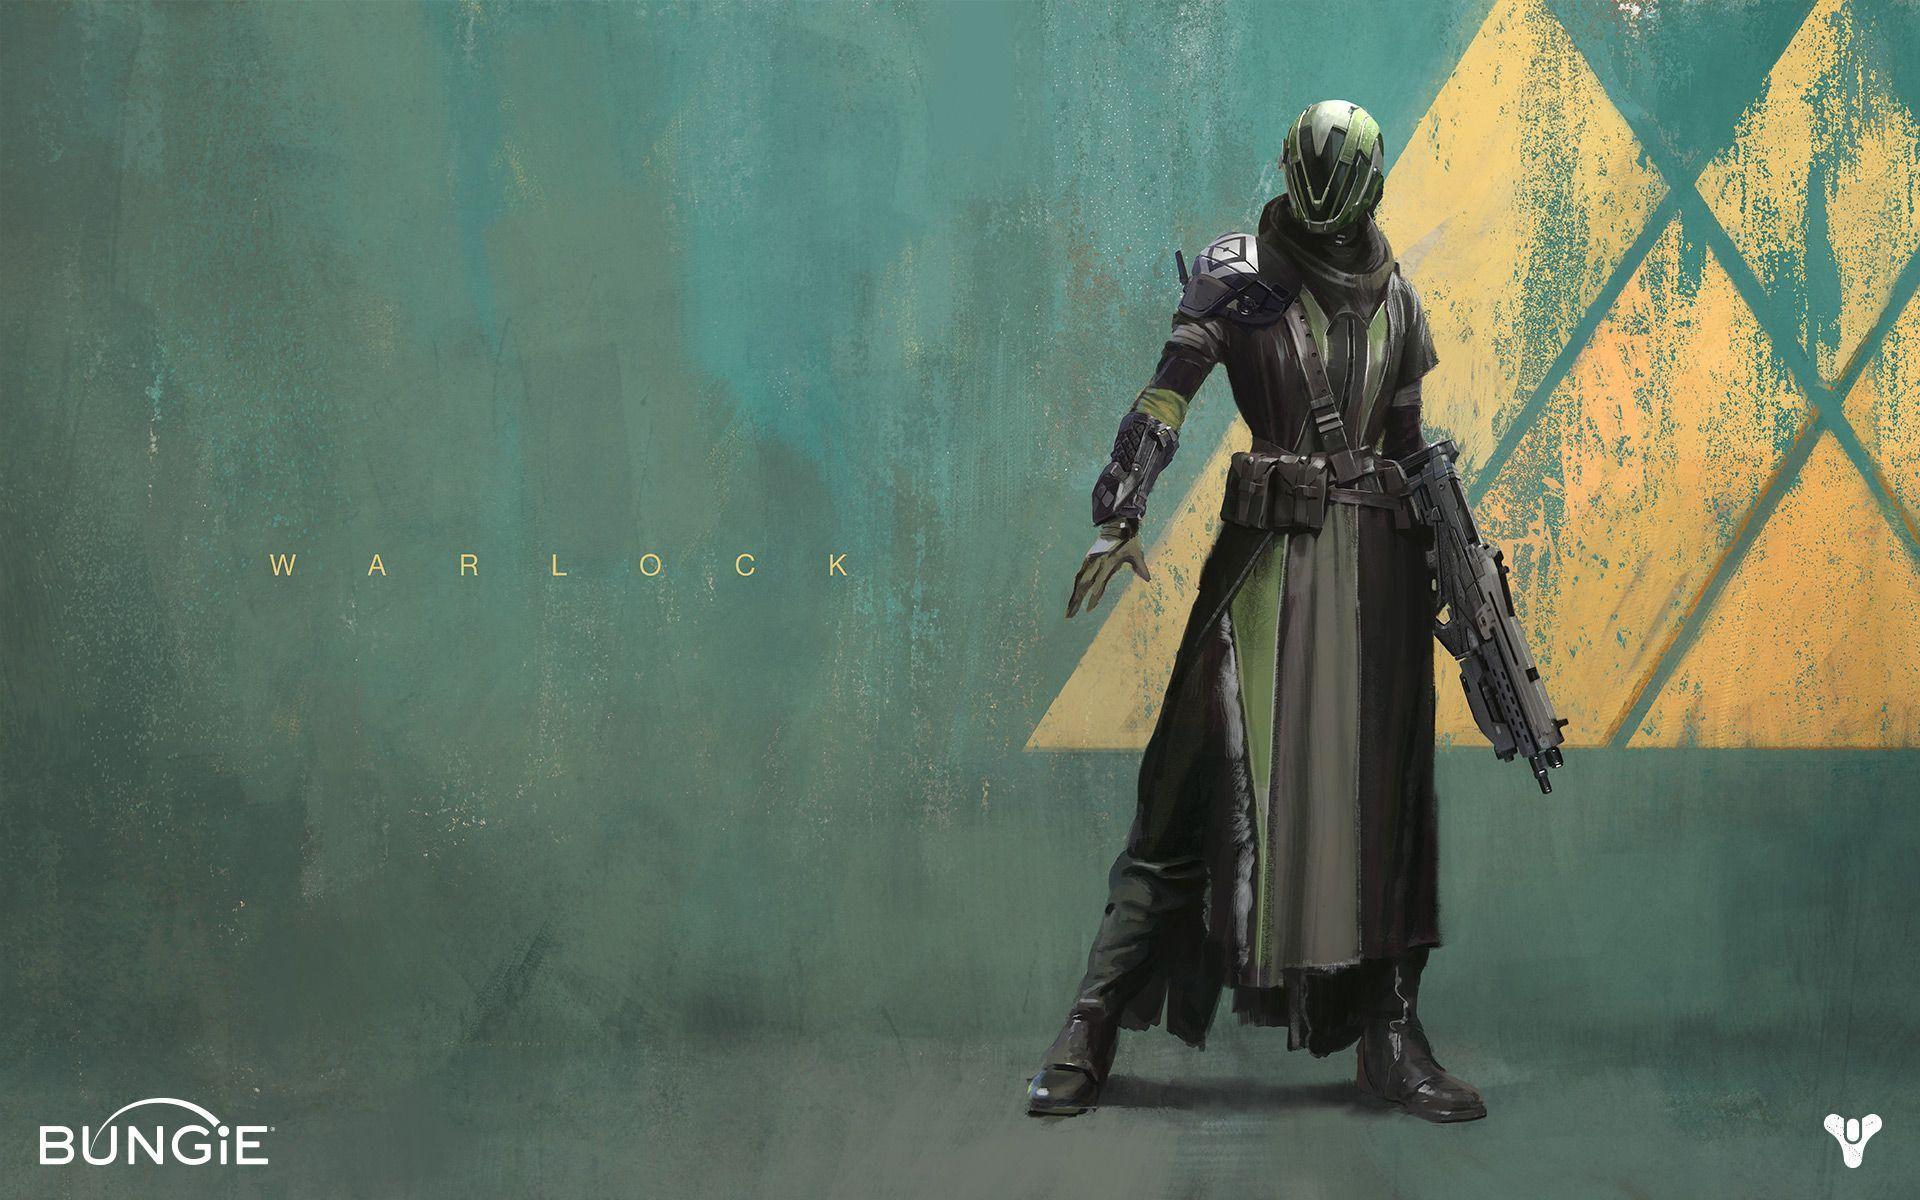 Warlock On Destiny HD Wallpaper. TanukinoSippo